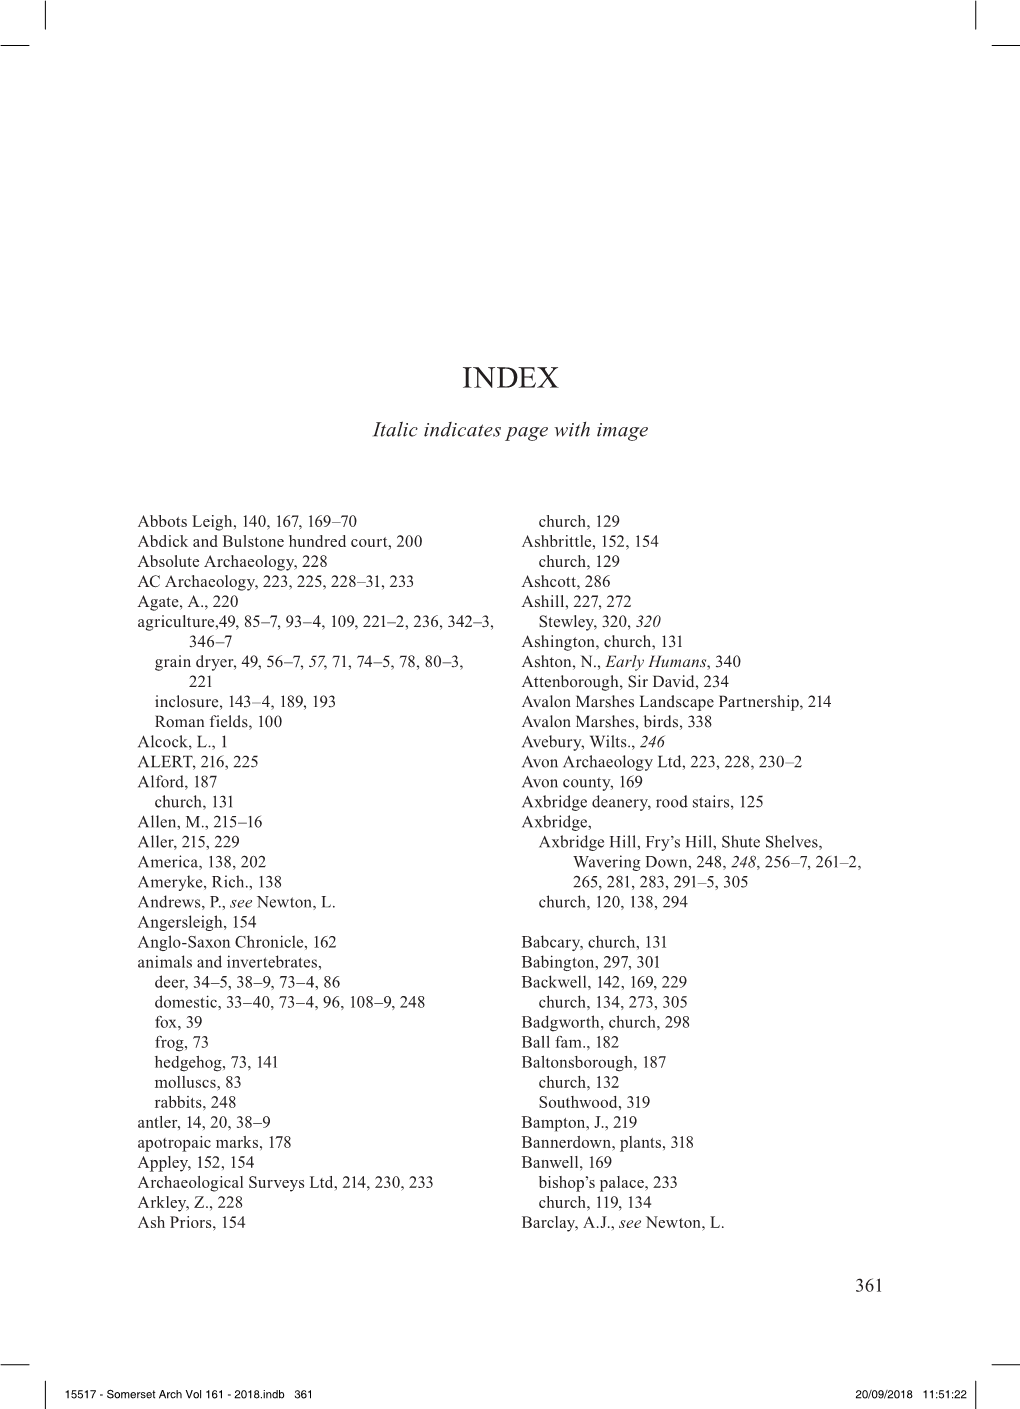 Siraut, M, Index, Volume